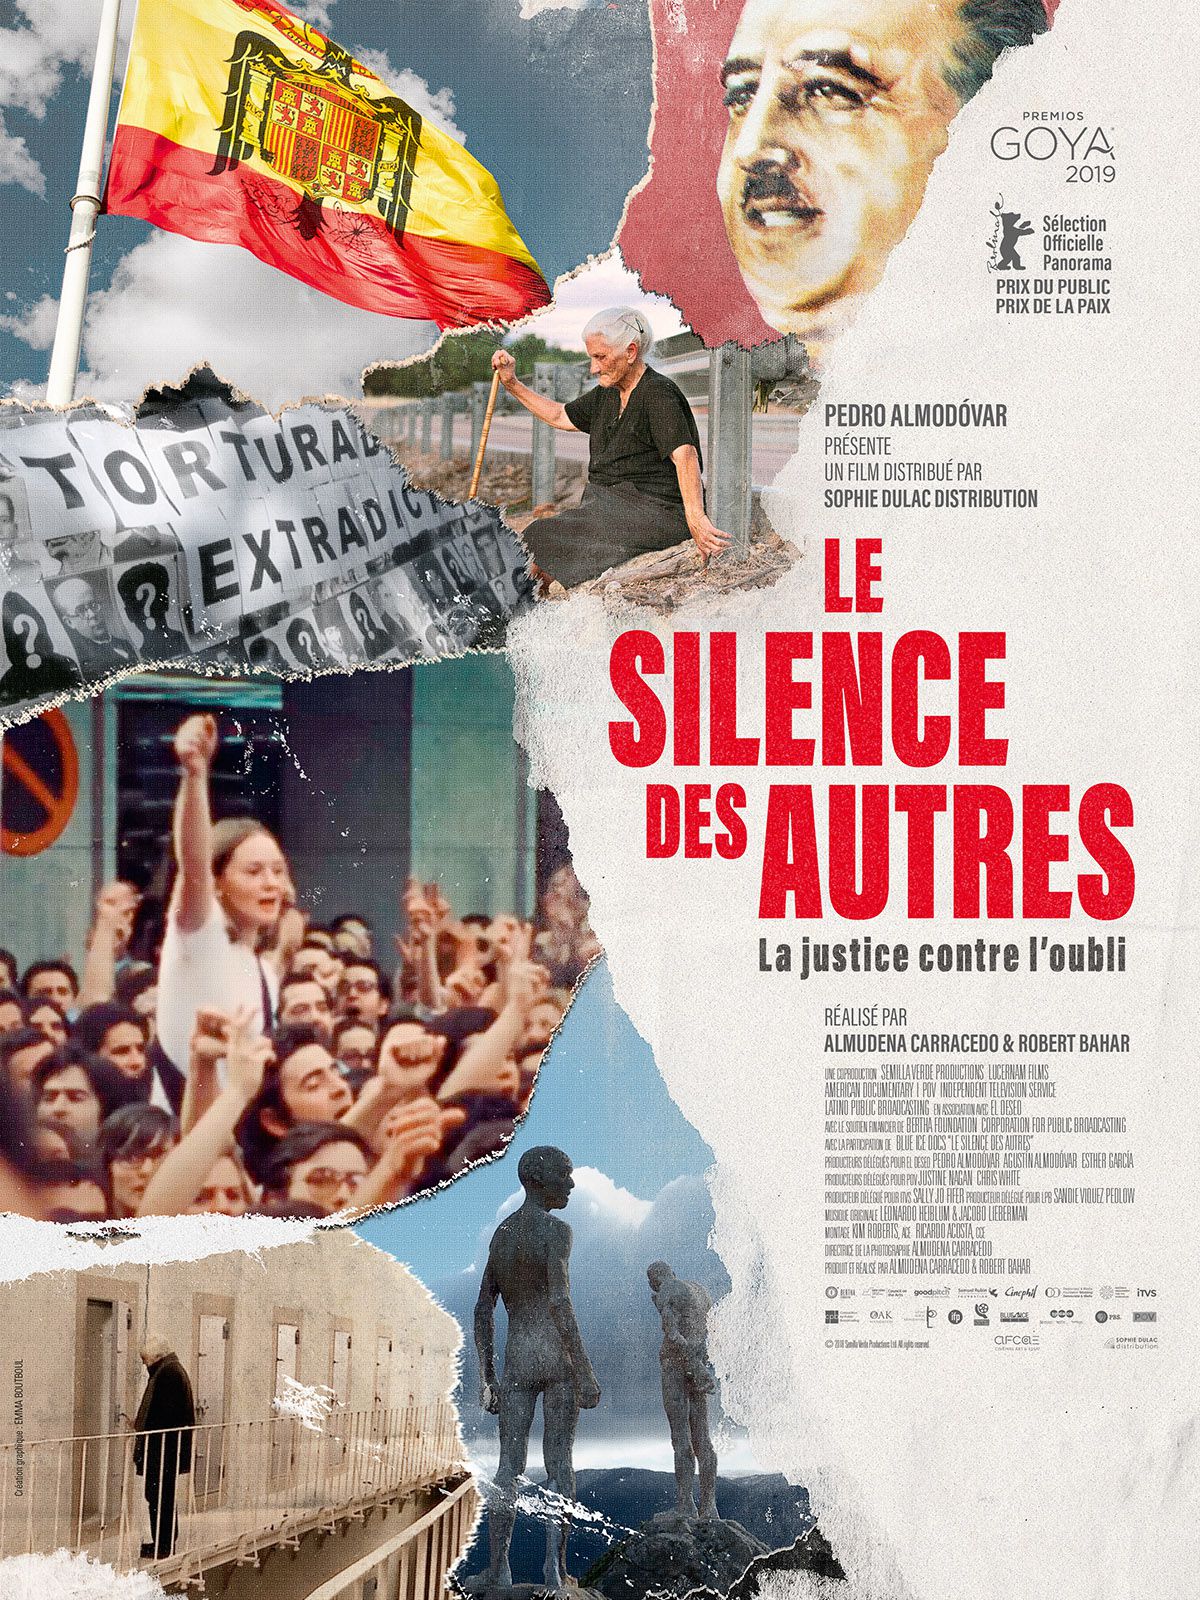 Le Silence des autres - Documentaire (2019) streaming VF gratuit complet